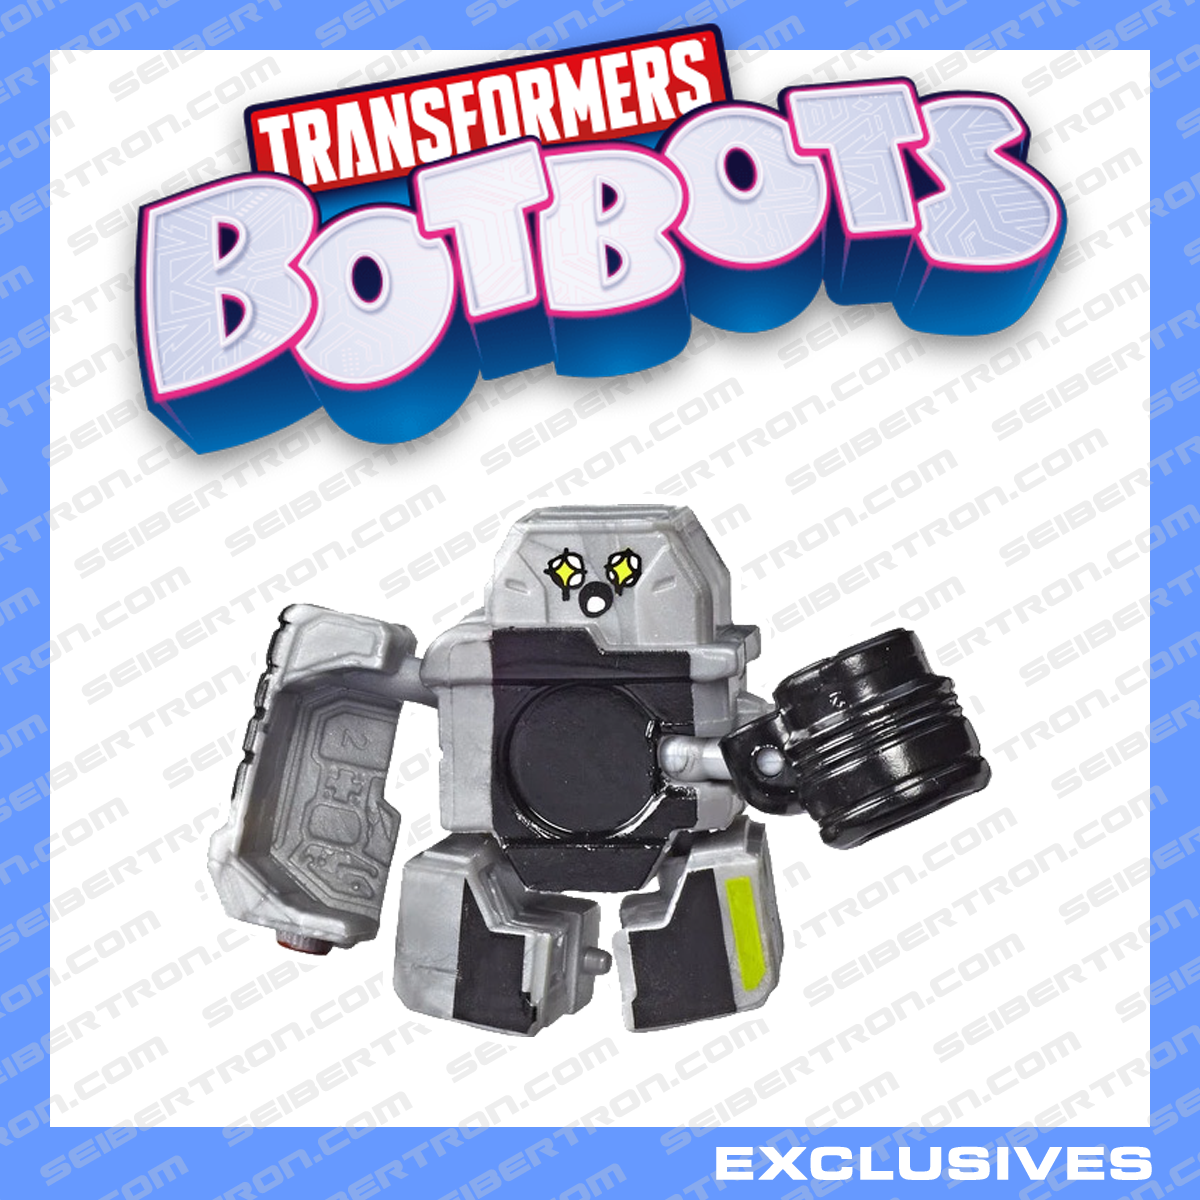 BOTARAZZI Transformers BotBots Con Crew Meet N Greets camera 2019